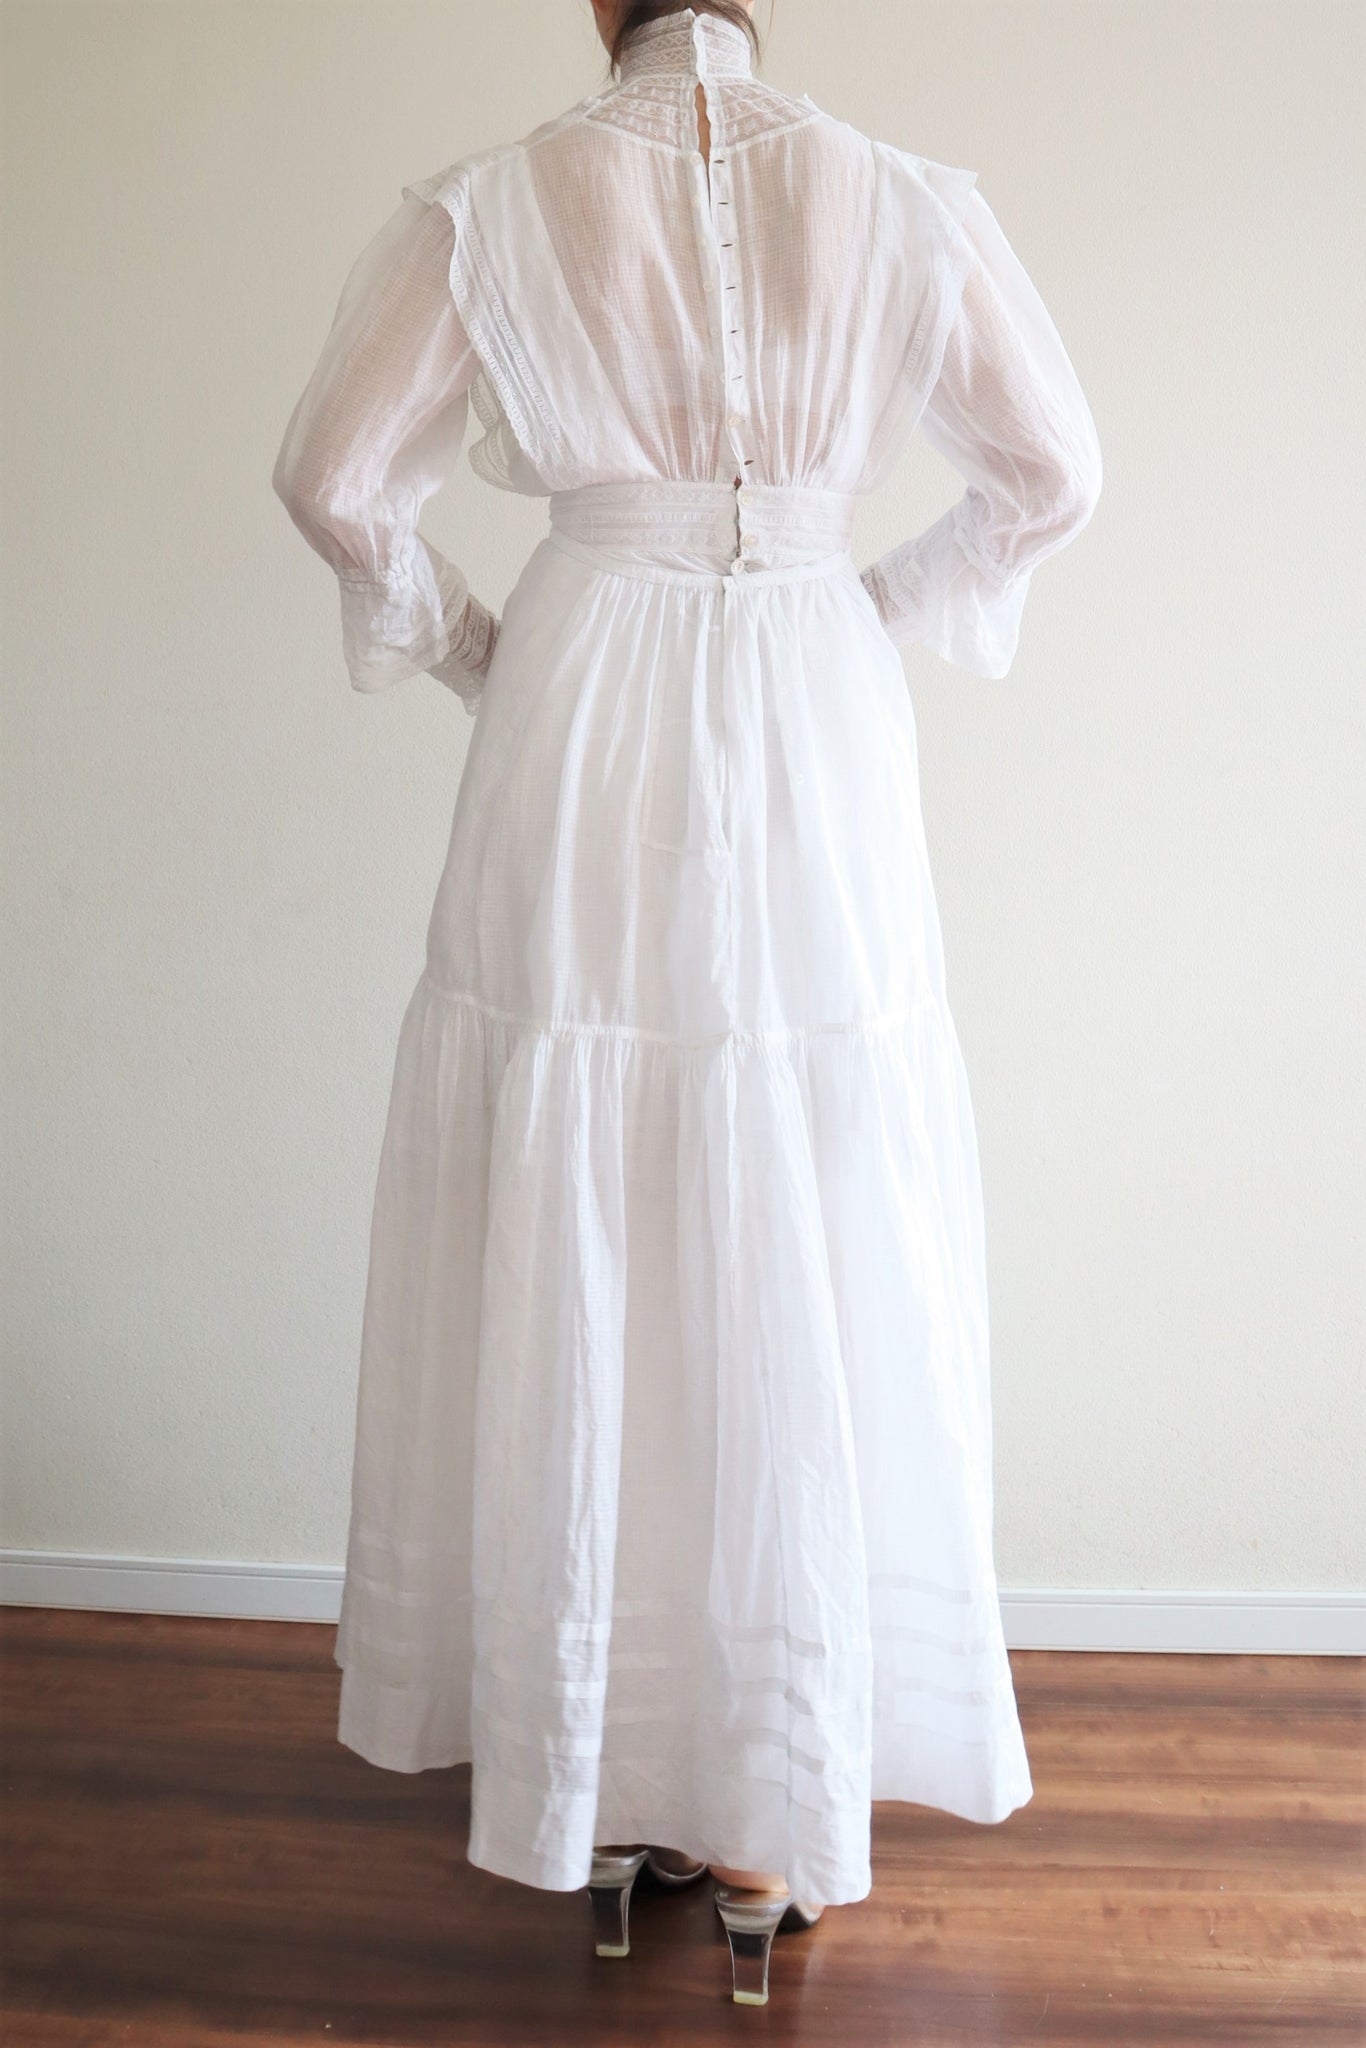 1910s Edwardian Sheer Lawn Cotton Tea Dress Skirt